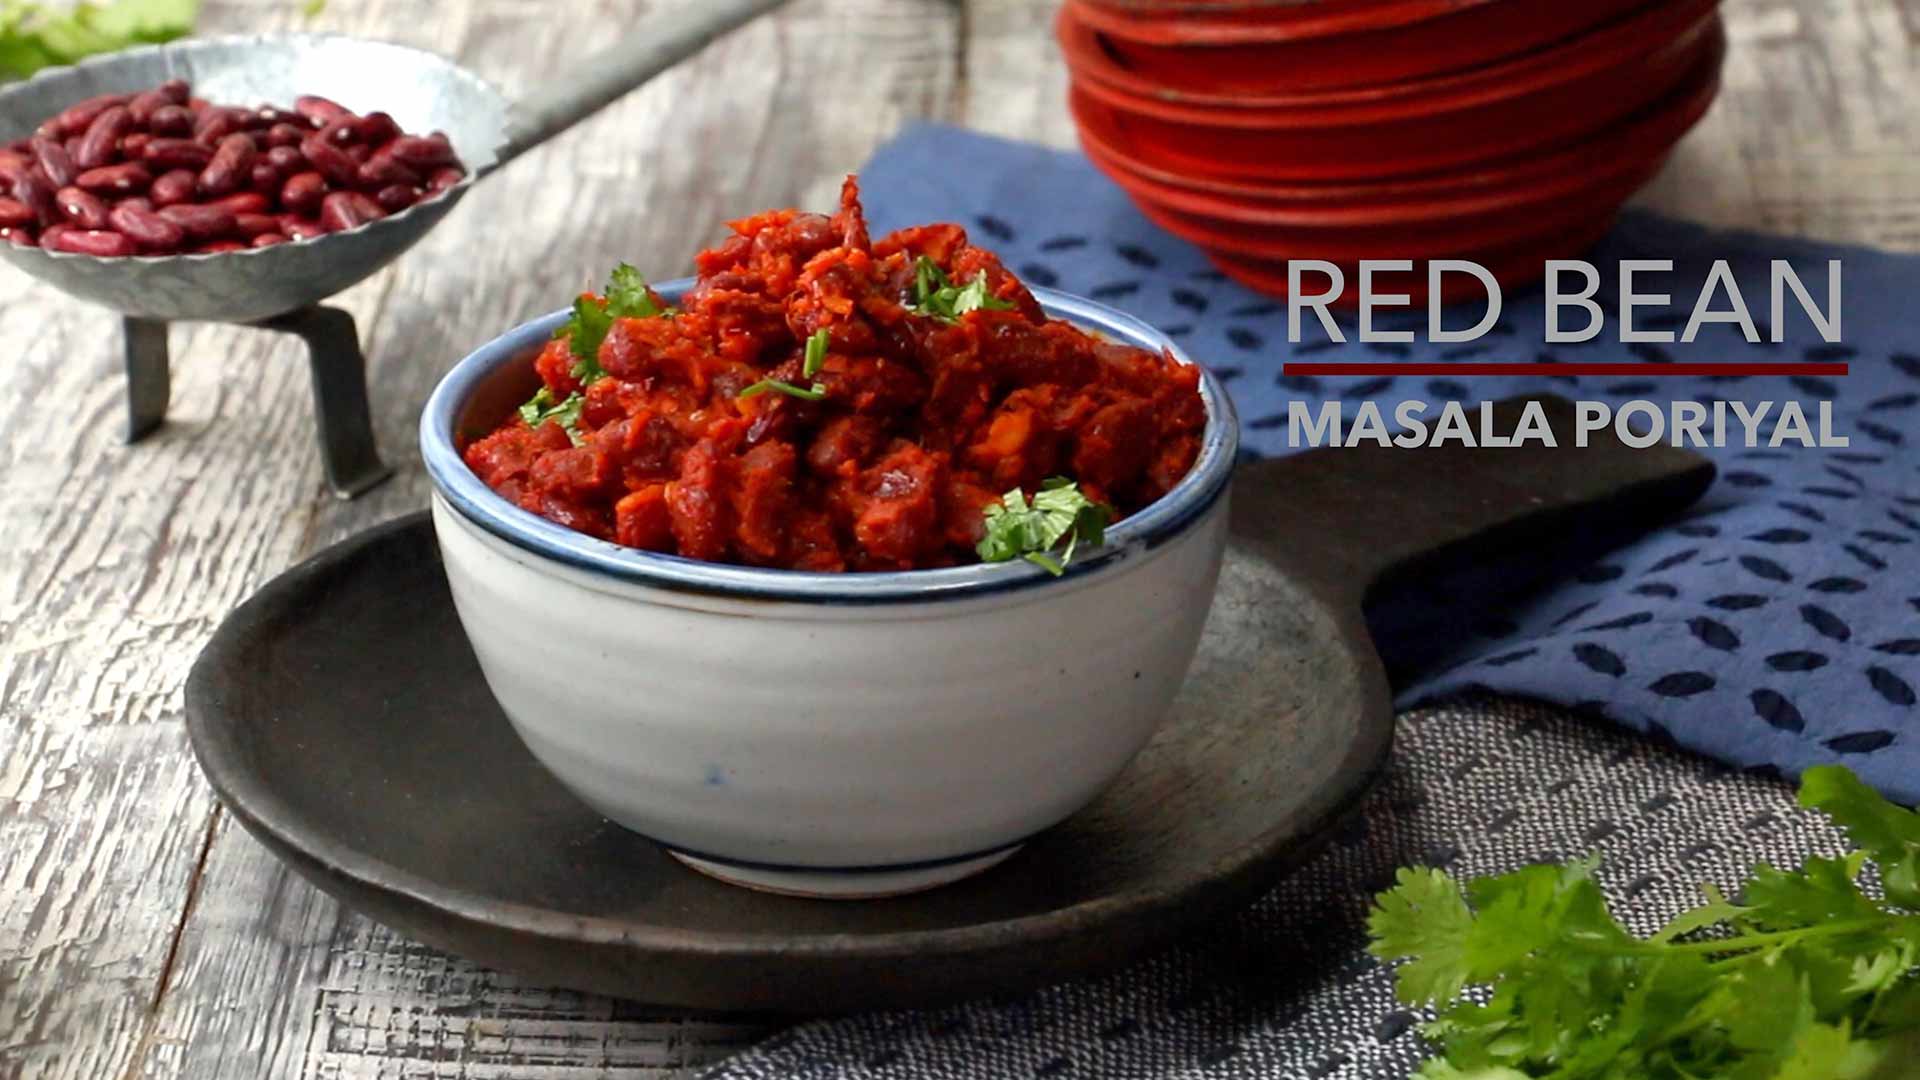 Red Beans Masala Poriyal Recipe from Chettinad | Rajma Masala Recipe